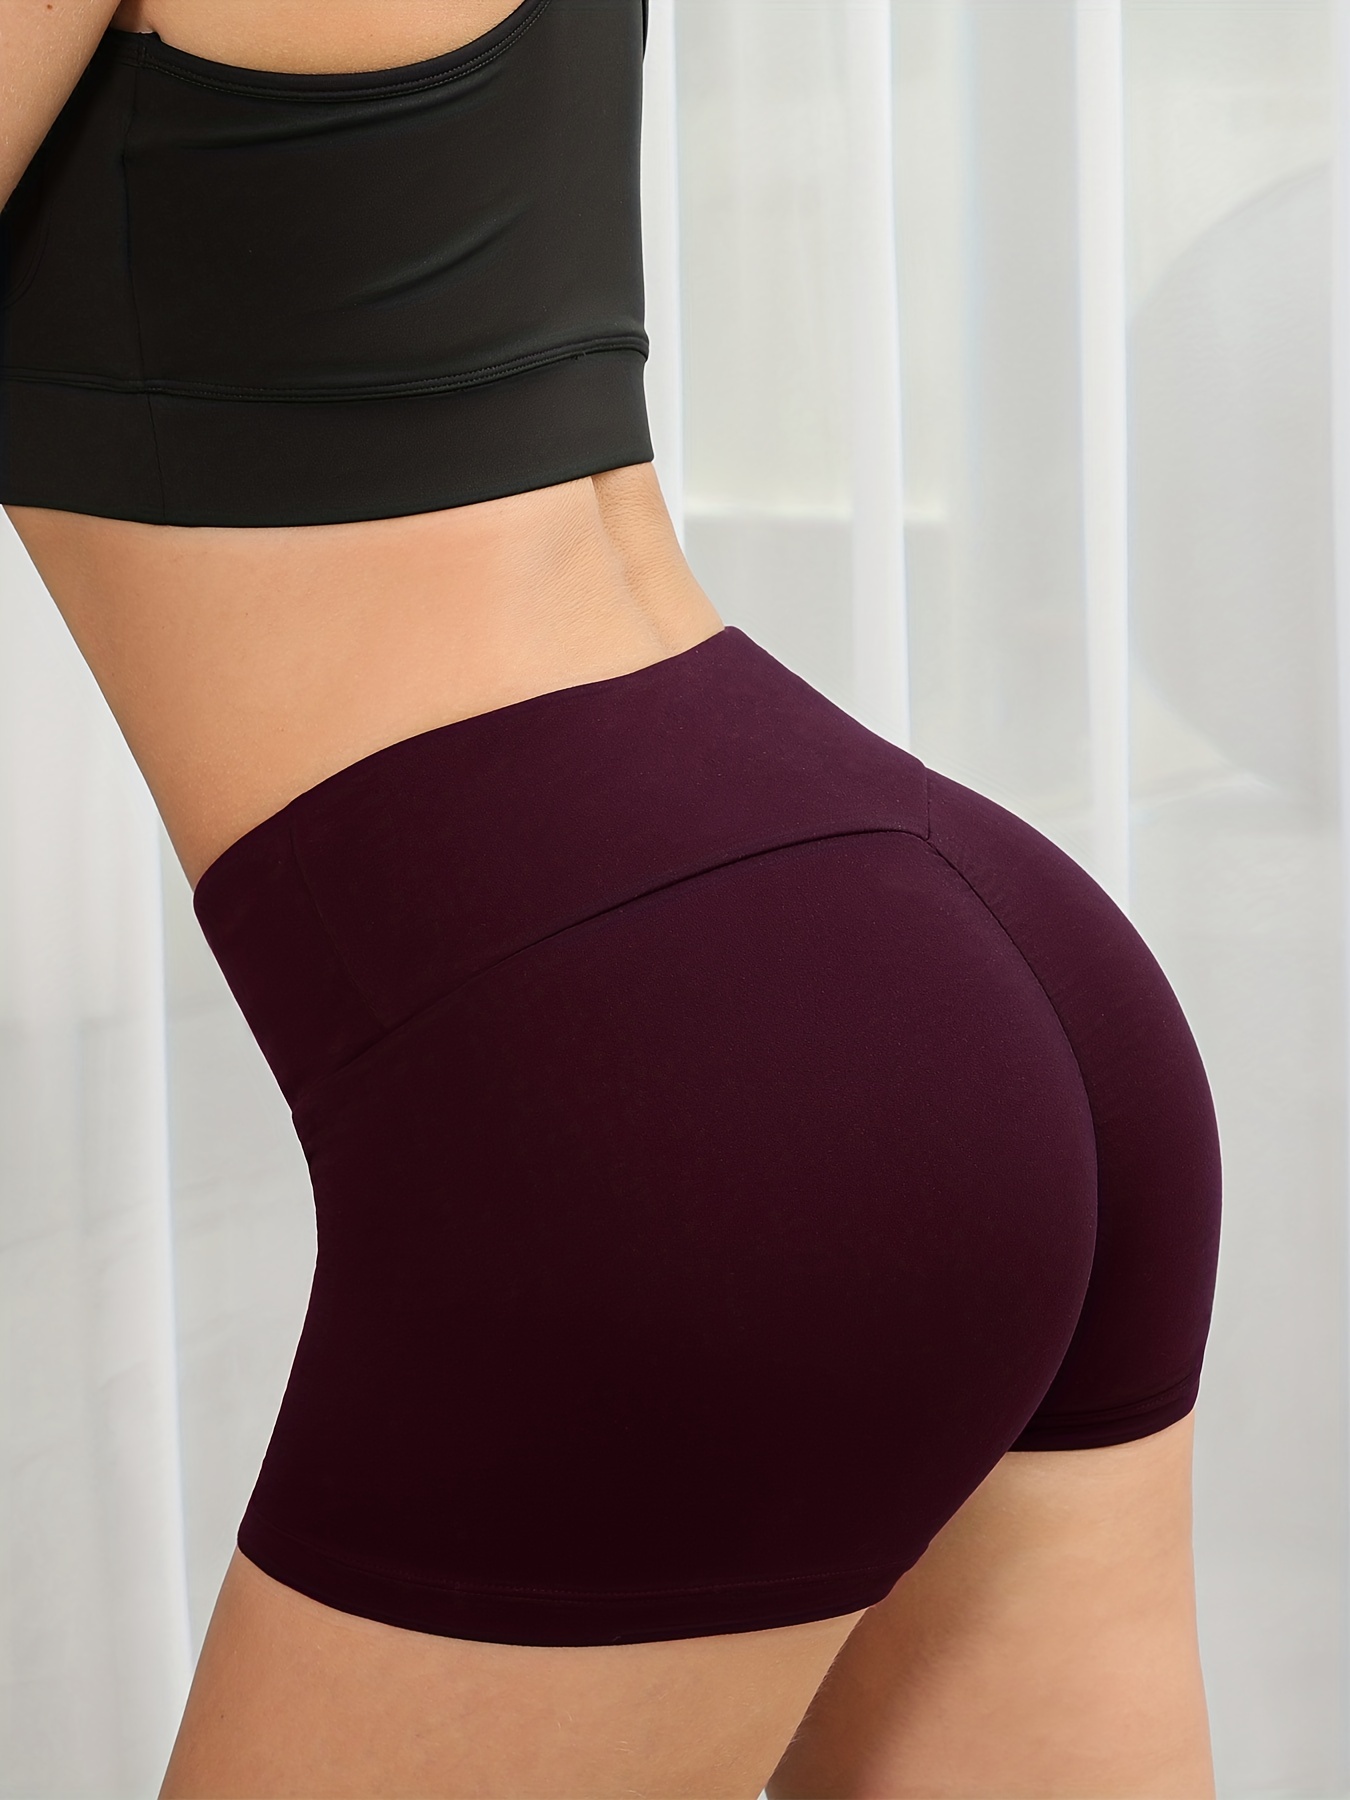 Fashion Fitness Booty Shorts for Women Scrunch Butt Yoga Workout